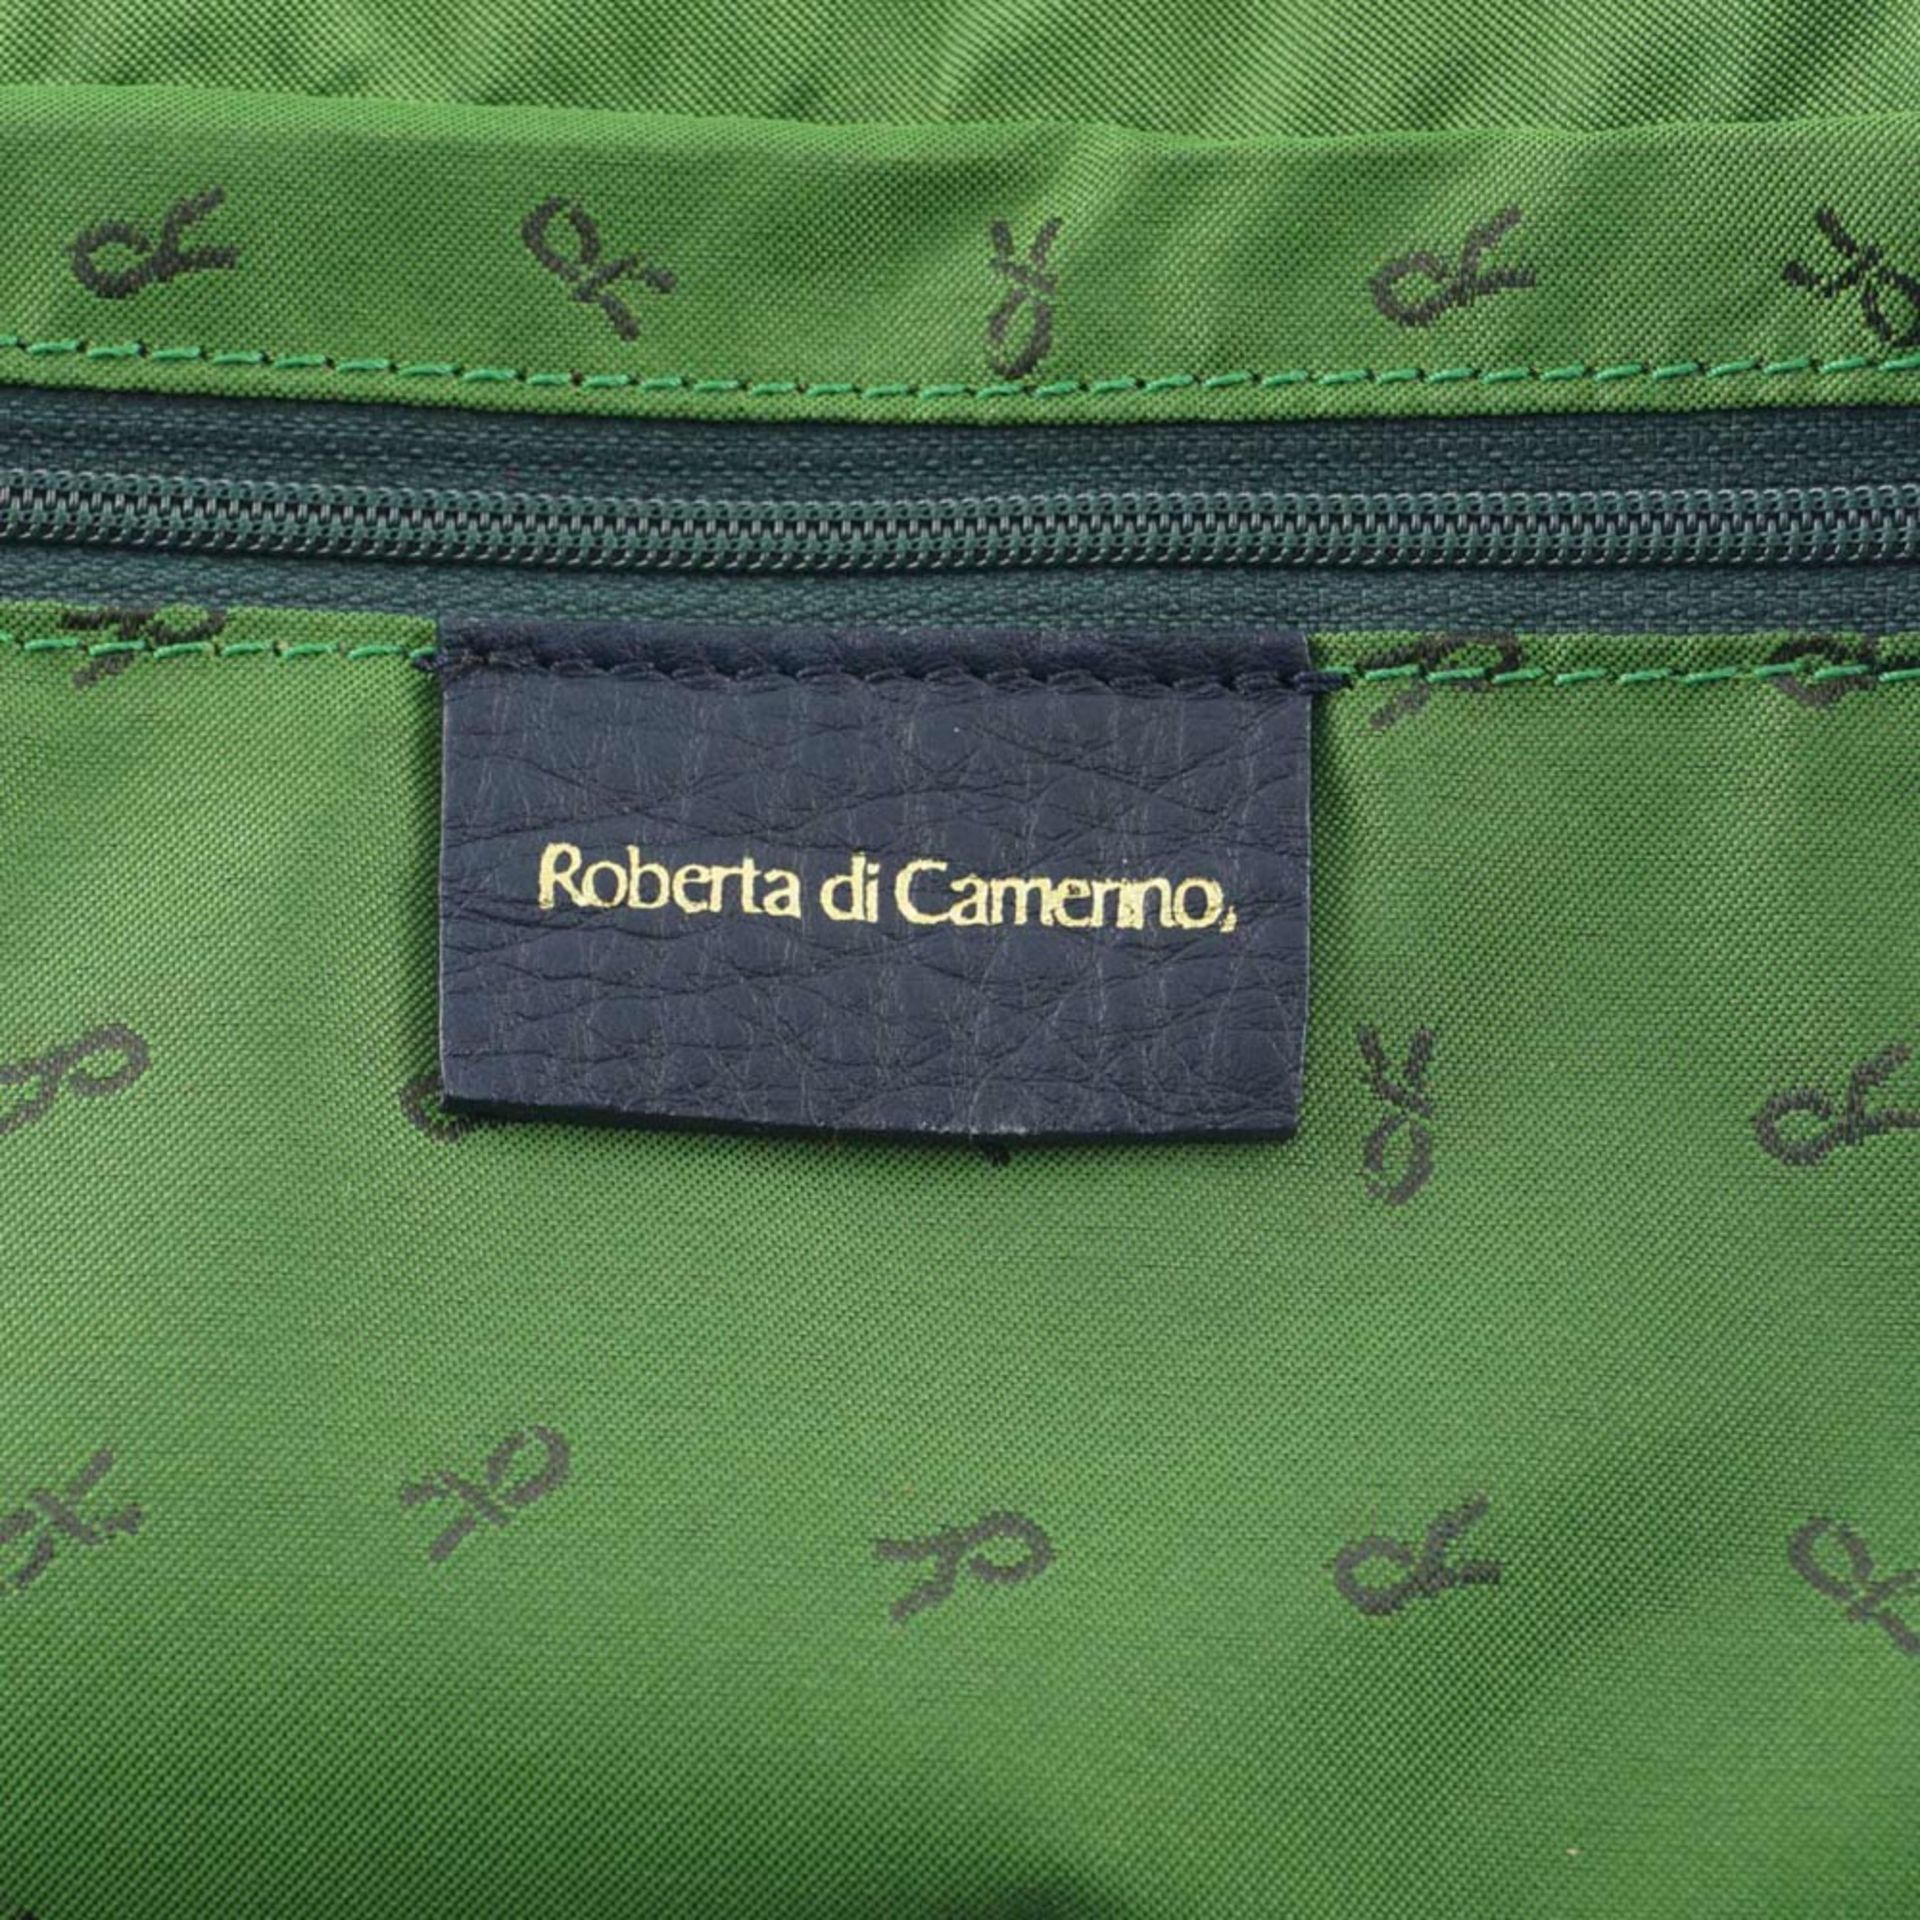 Roberta di Camerino Summer collectiom, vintage shoulder bag 33x55x16 cm. - Image 4 of 5